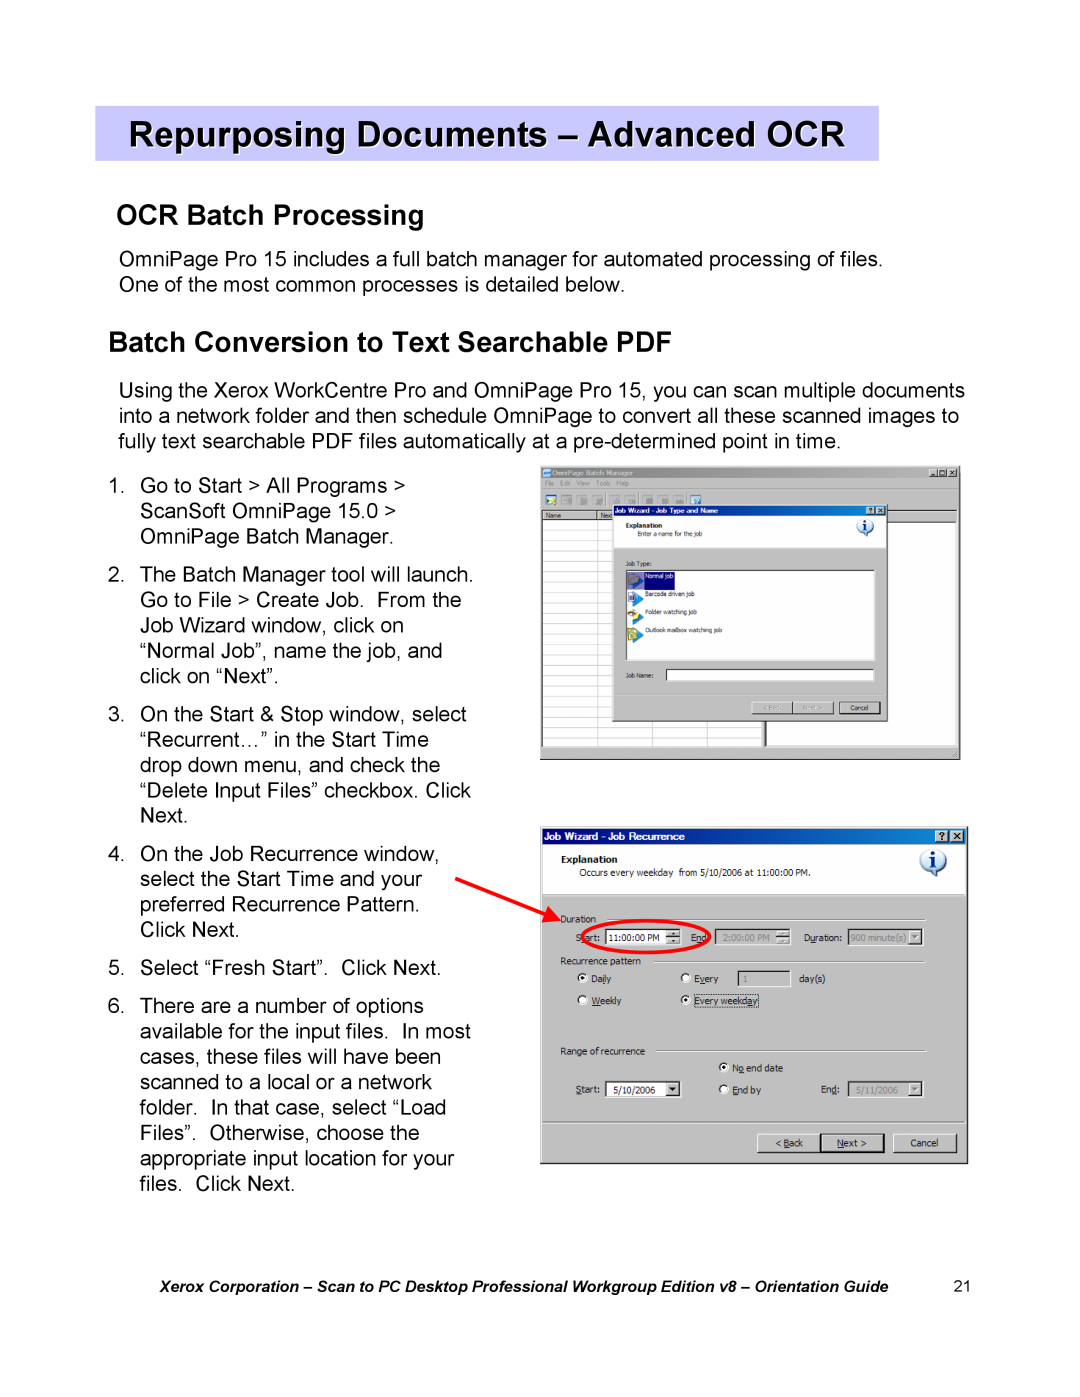 Xerox G8144Z manual OCR Batch Processing, Repurposing Documents -Advanced OCR 